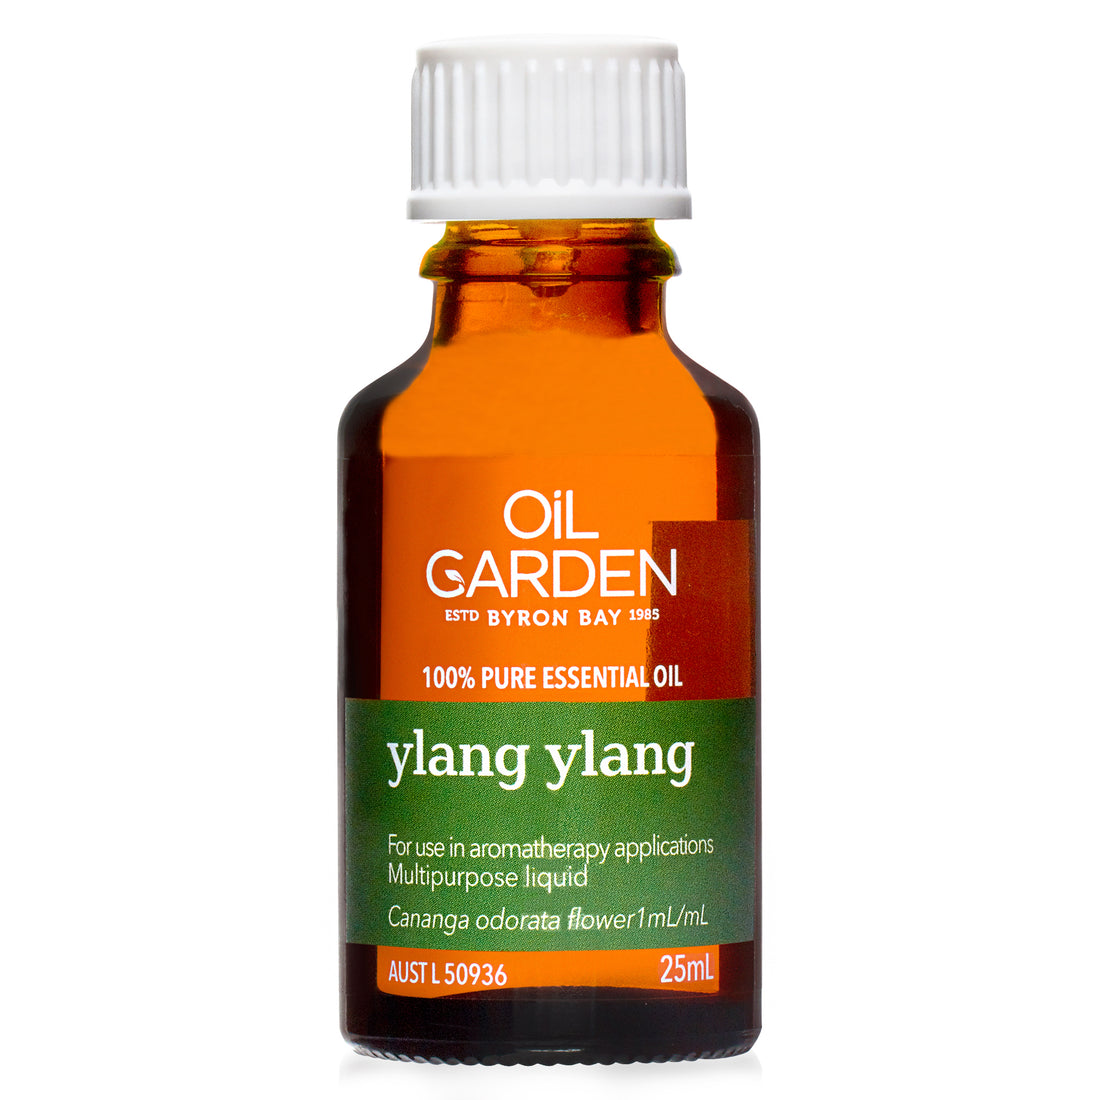 Oil Garden Ylang Ylang Oil 25ml